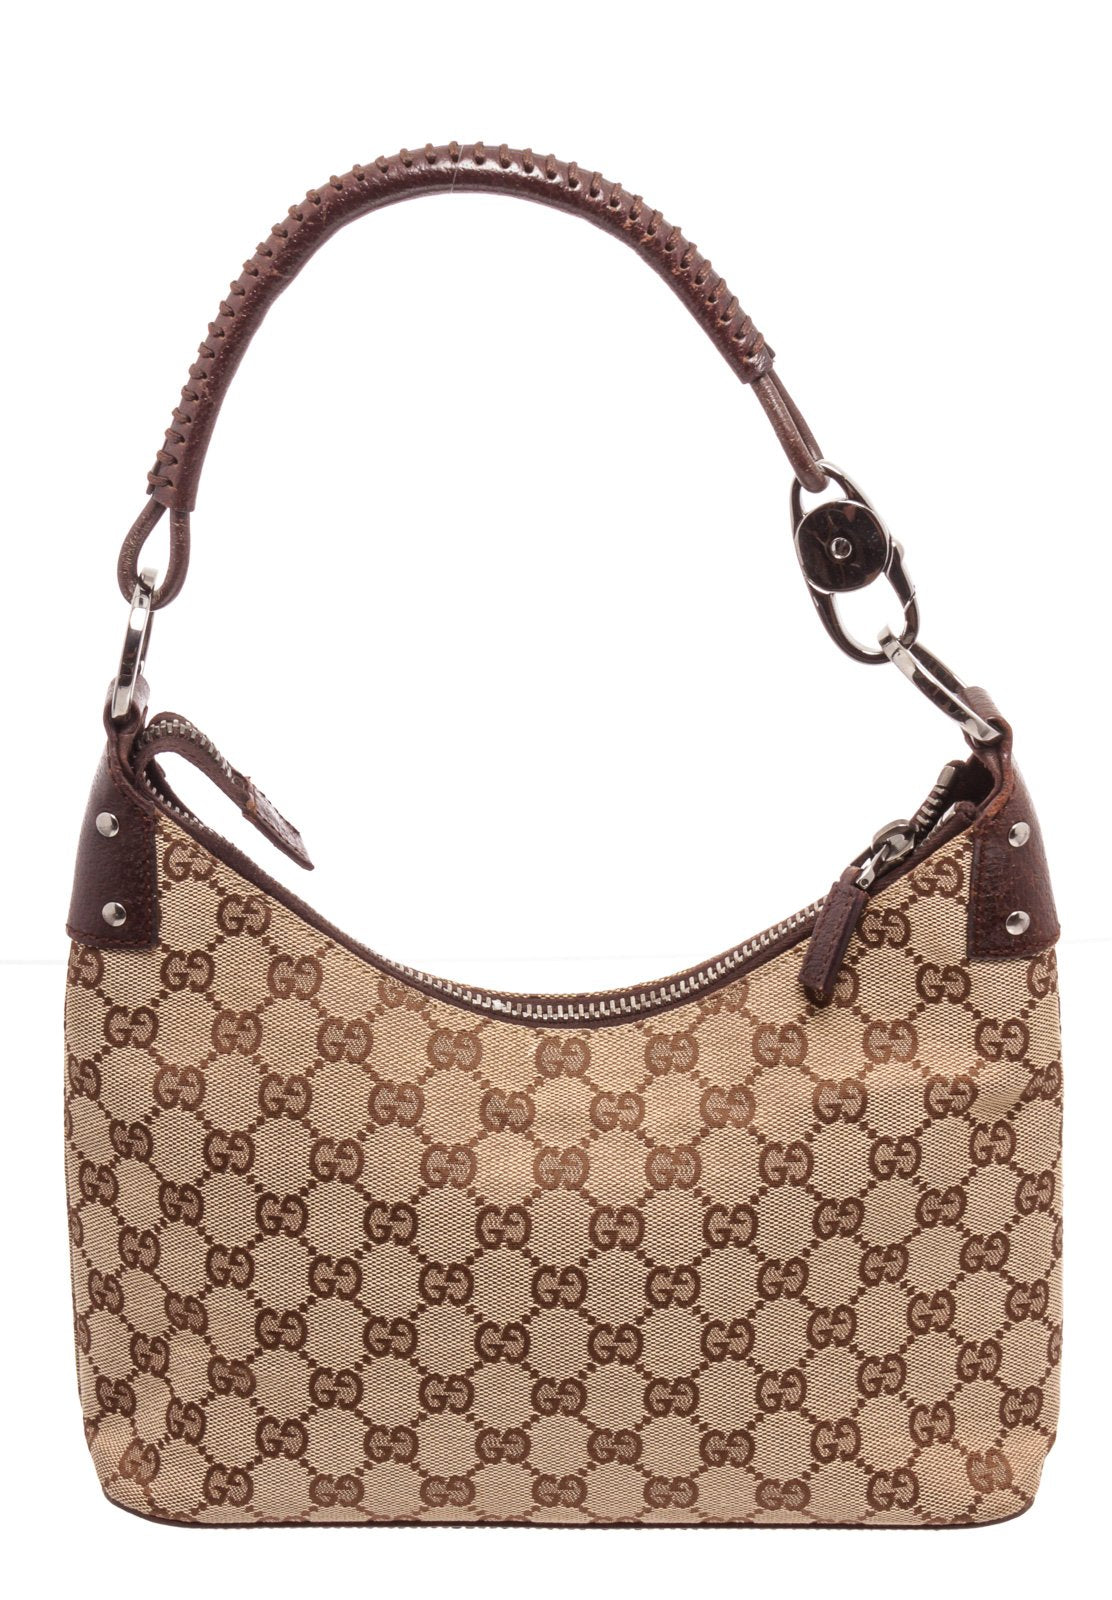 Vintage Authentic Gucci Shoulder Bag - TAO 919